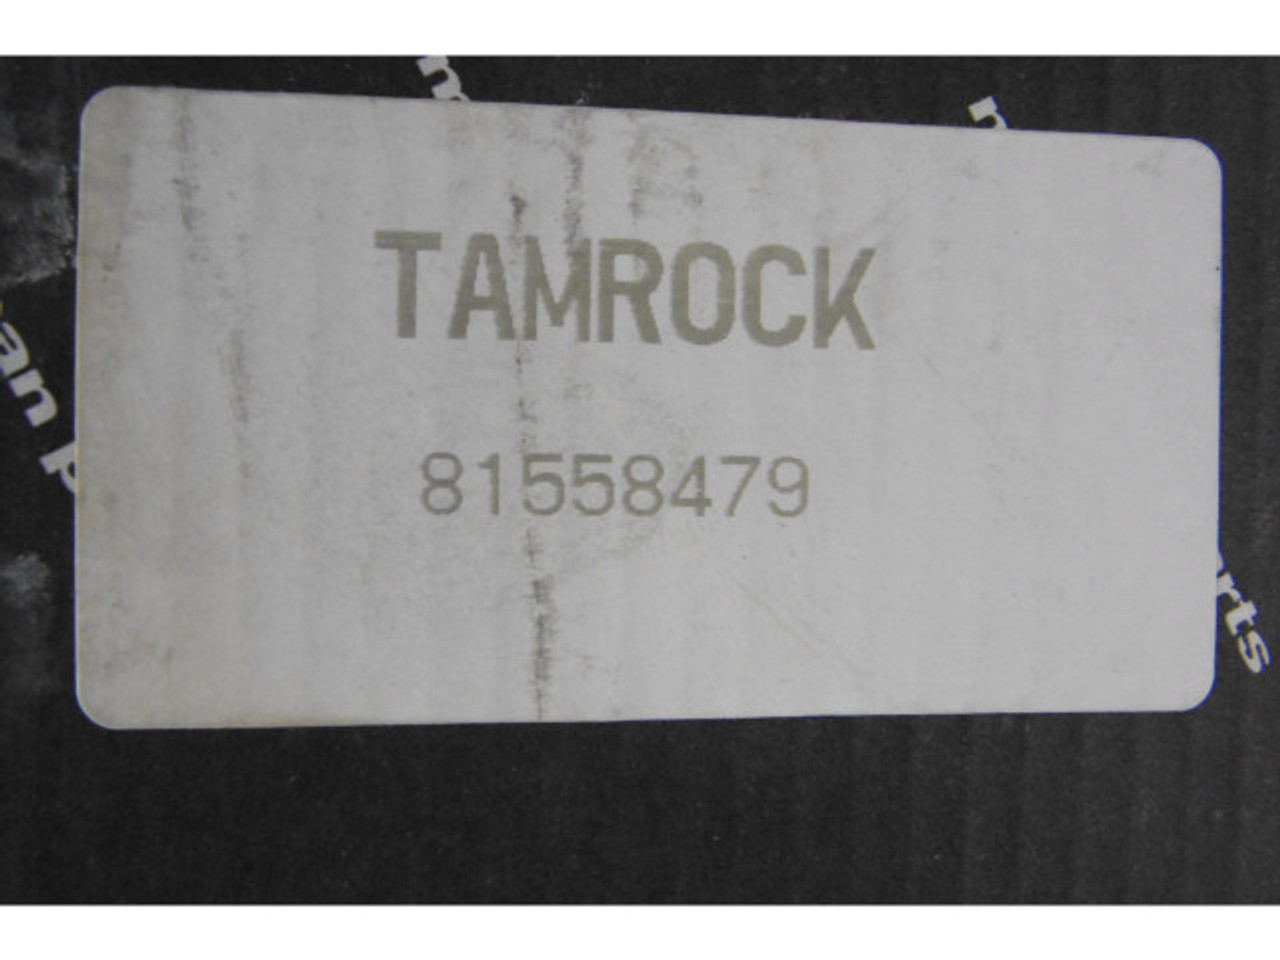 Sandvik 81558479 Tamrock Hydraulic Pressure Filter ! NEW !